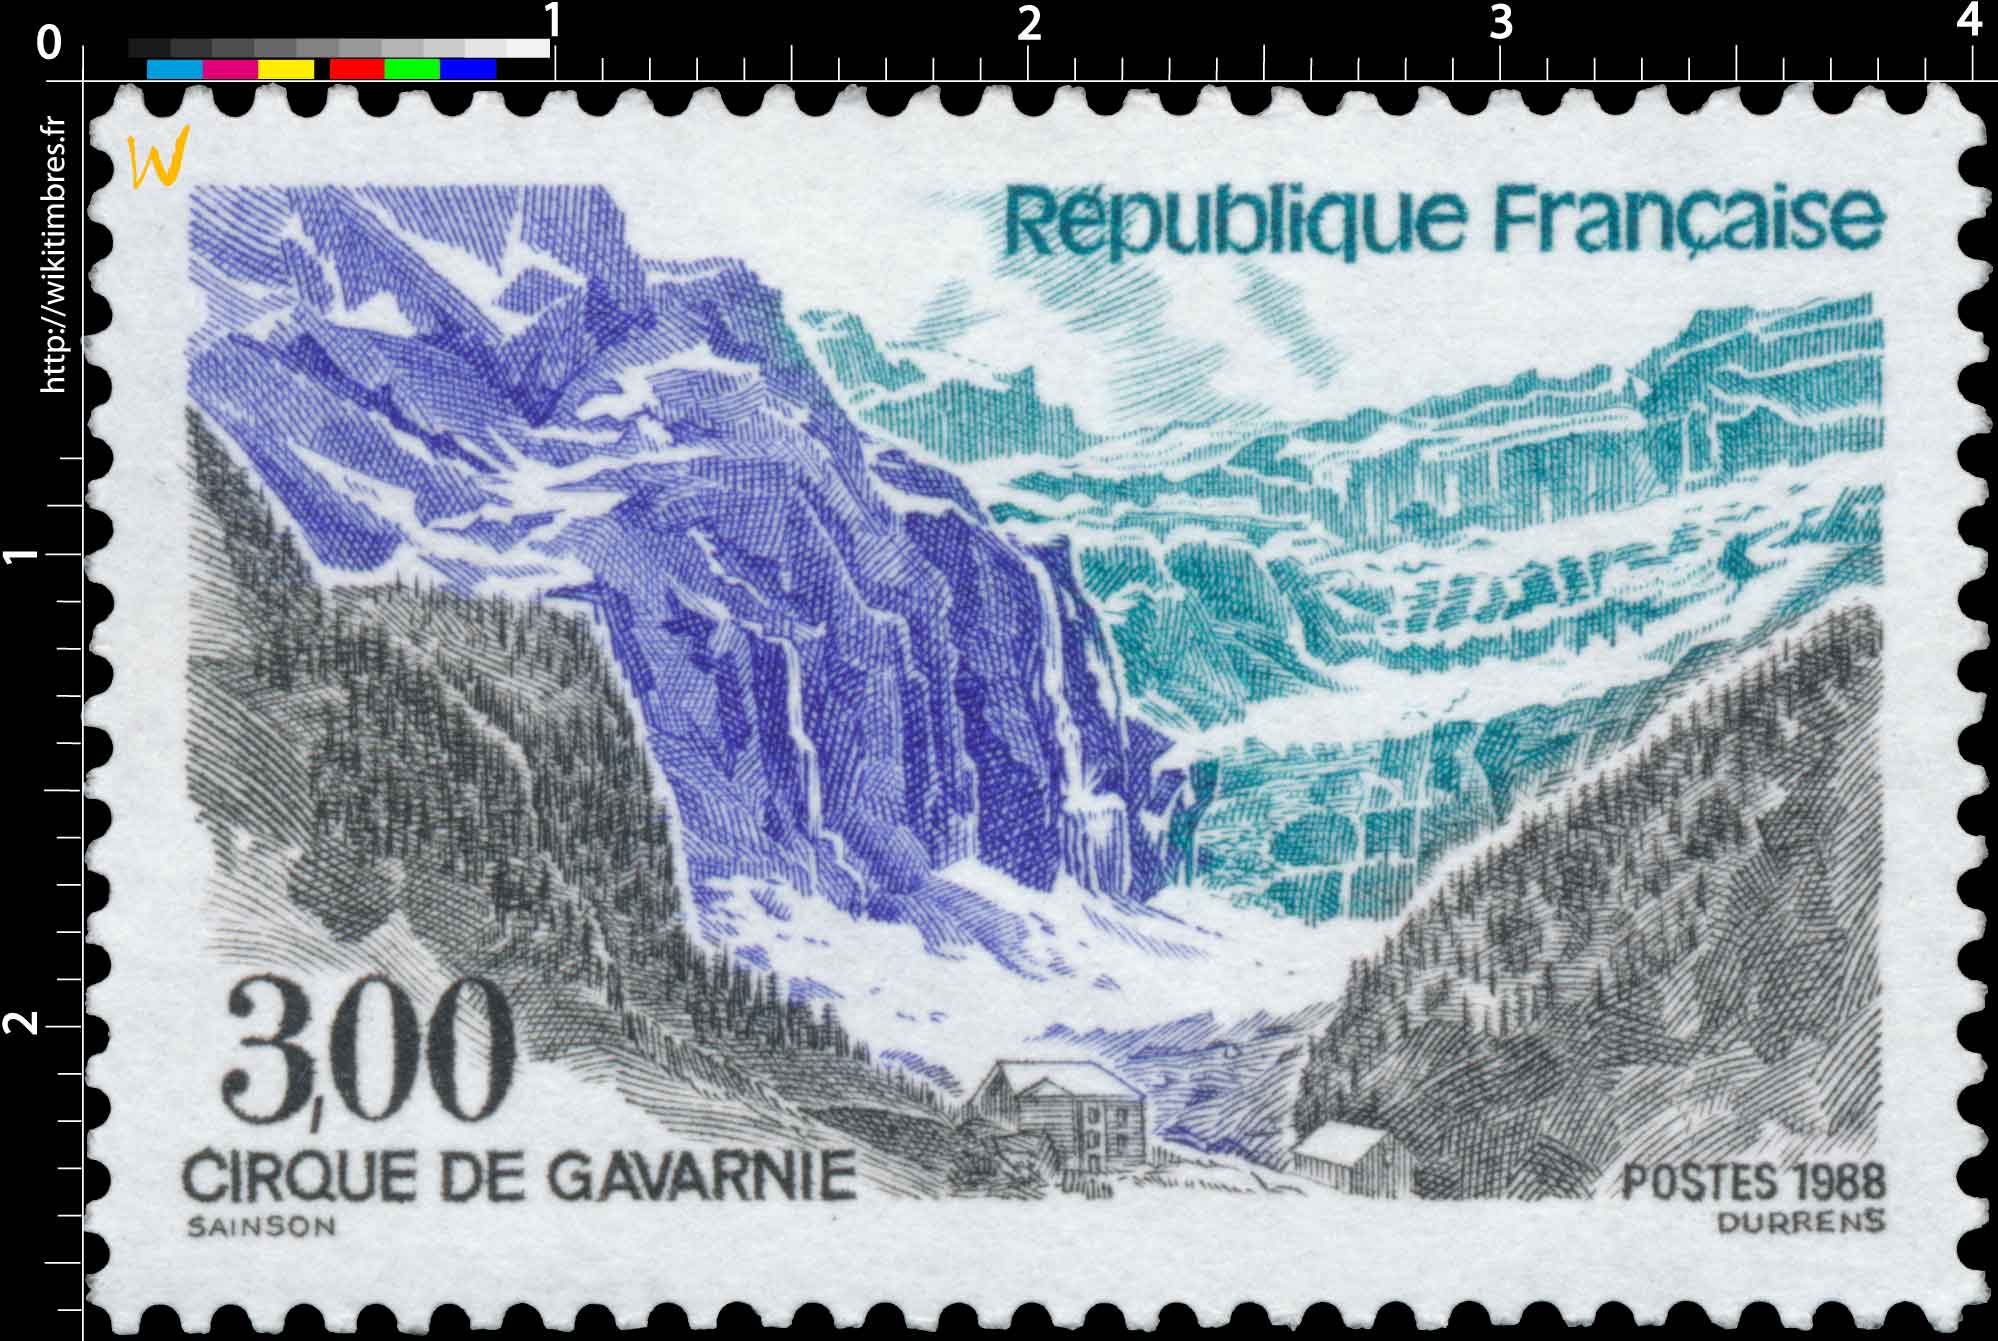 1988 CIRQUE DE GAVARNIE